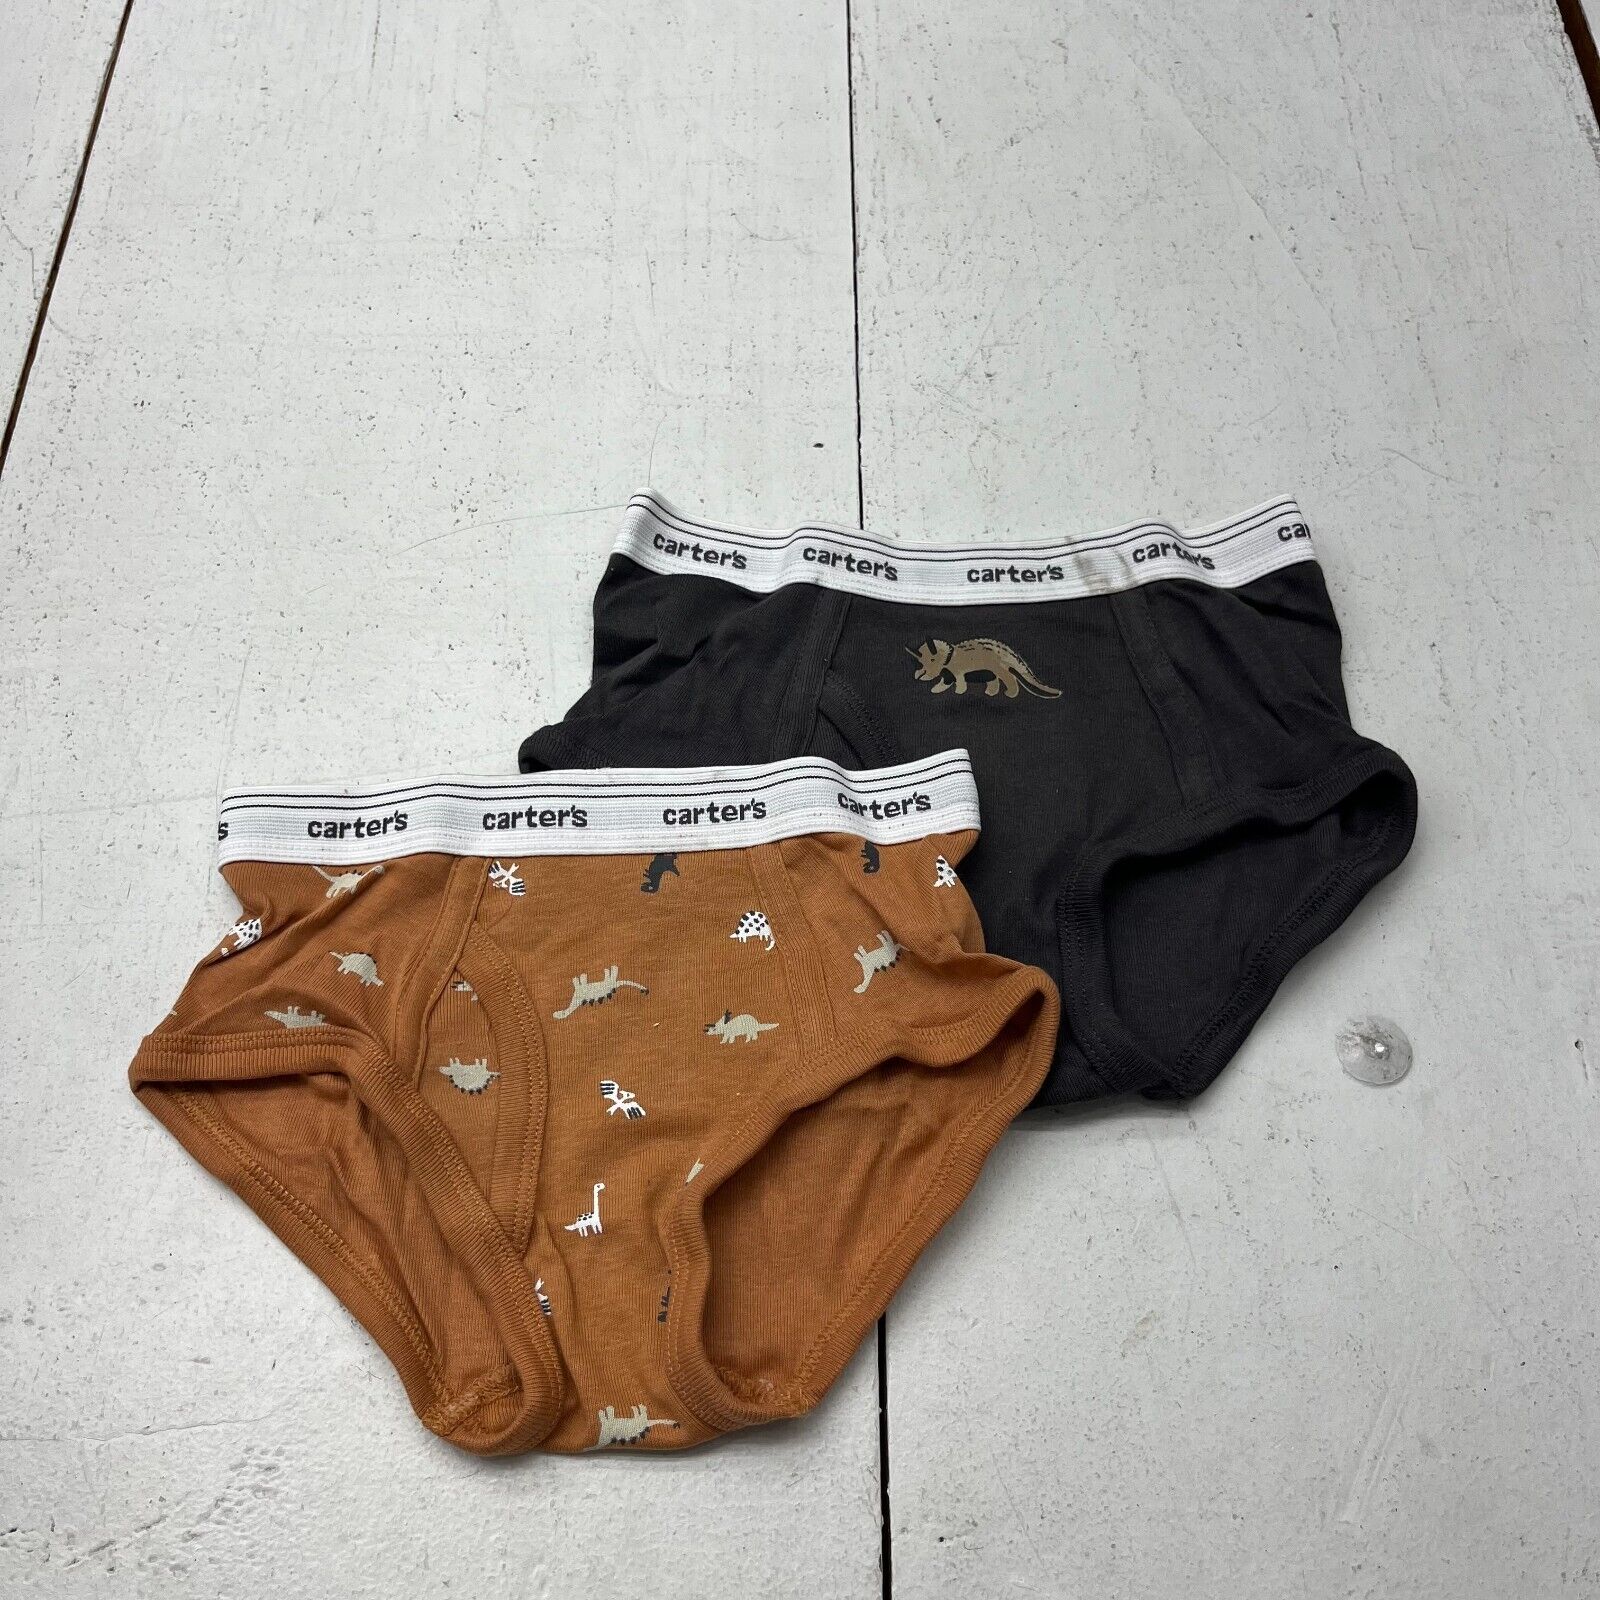 Carter's Black & Orange 2 Pack Printed Briefs Boys Size 4/5 NEW - beyond  exchange